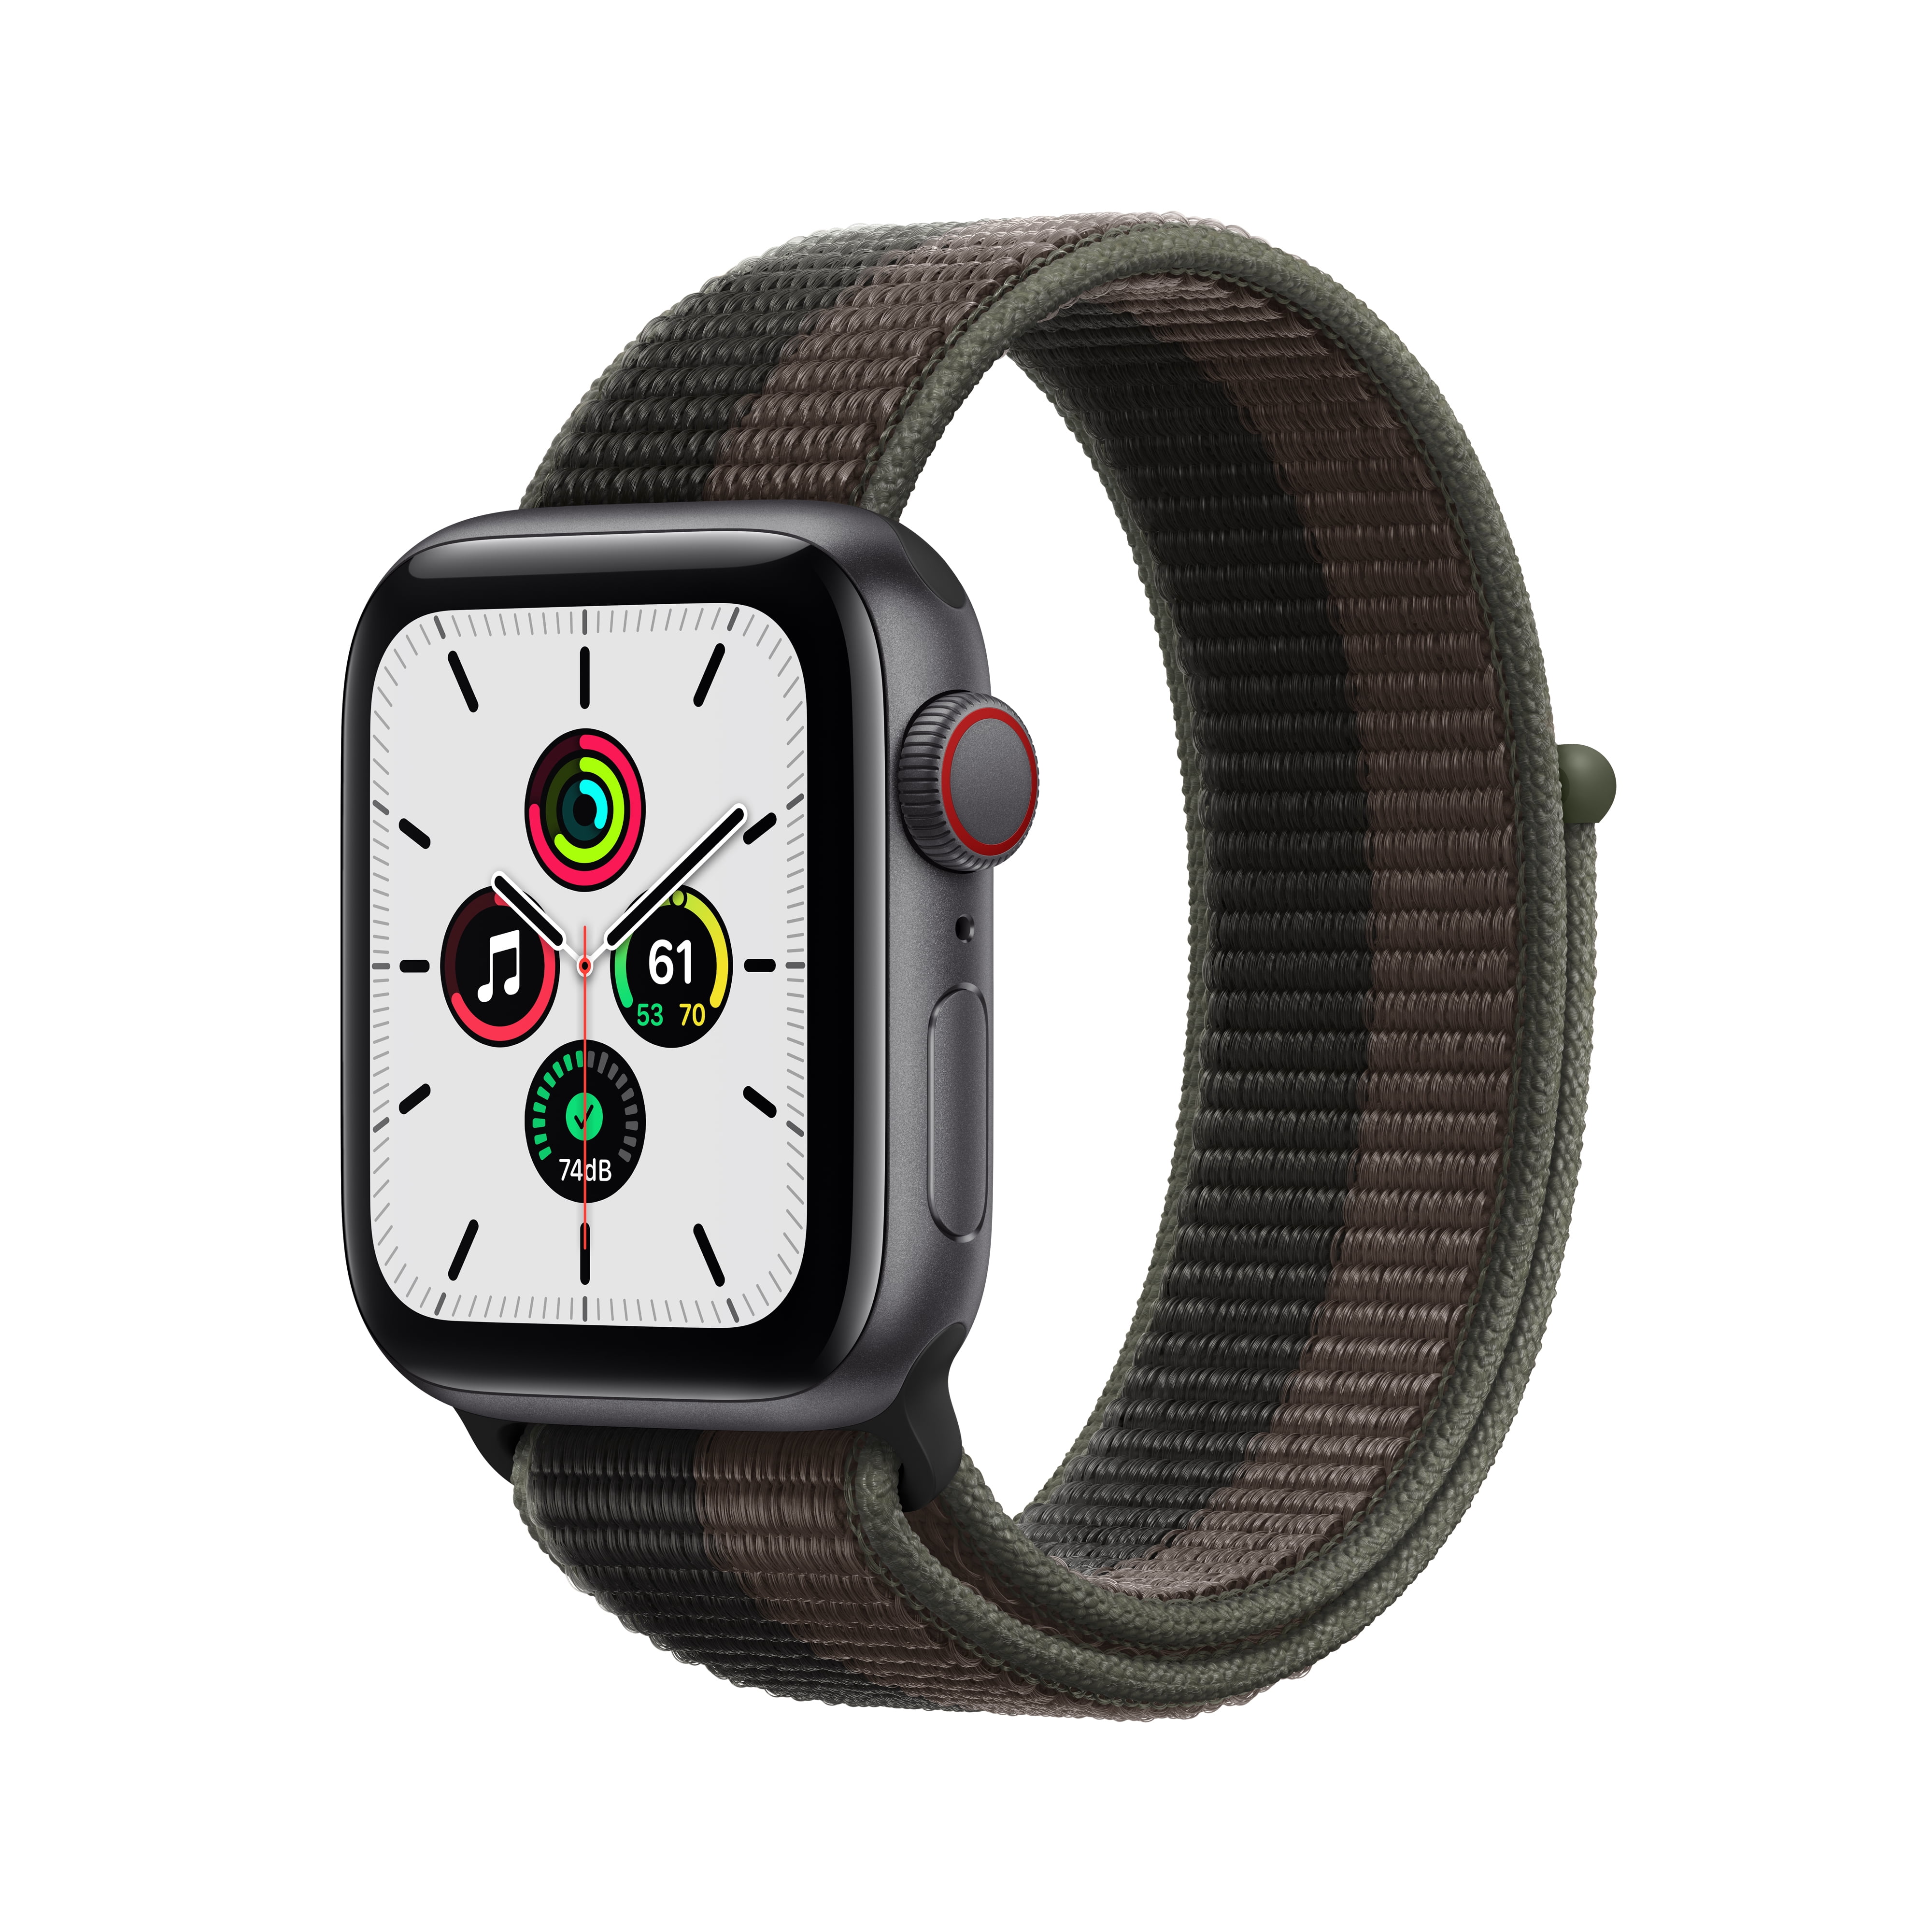 Refurbished Apple Watch Series 4 (GPS + Cellular) 44mm Smartwatch 